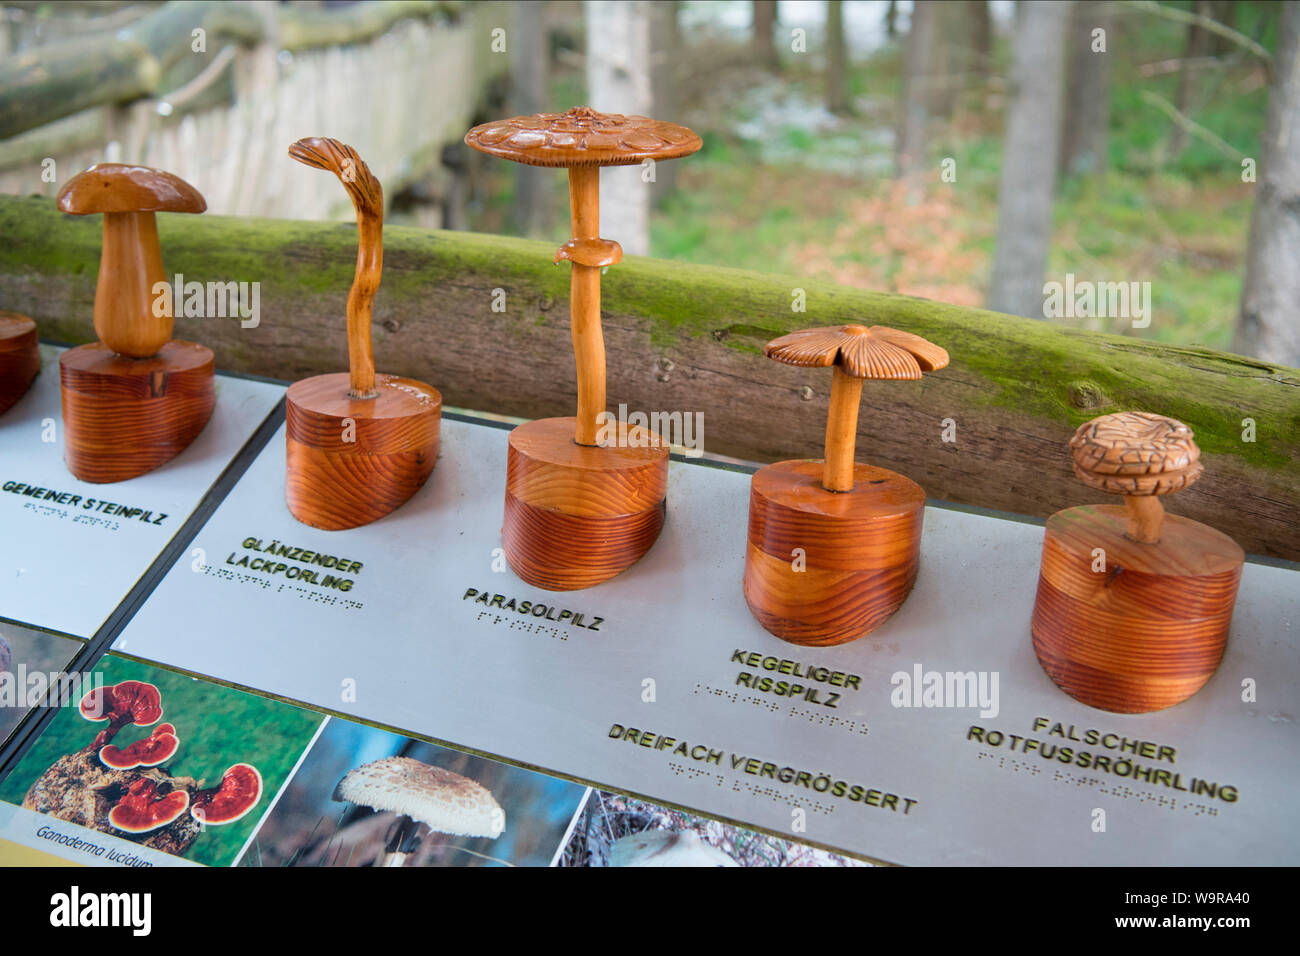 fungal models, nature discovery trail, Eifel National Park, North Rhine-Westphalia, Germany, Europe Stock Photo